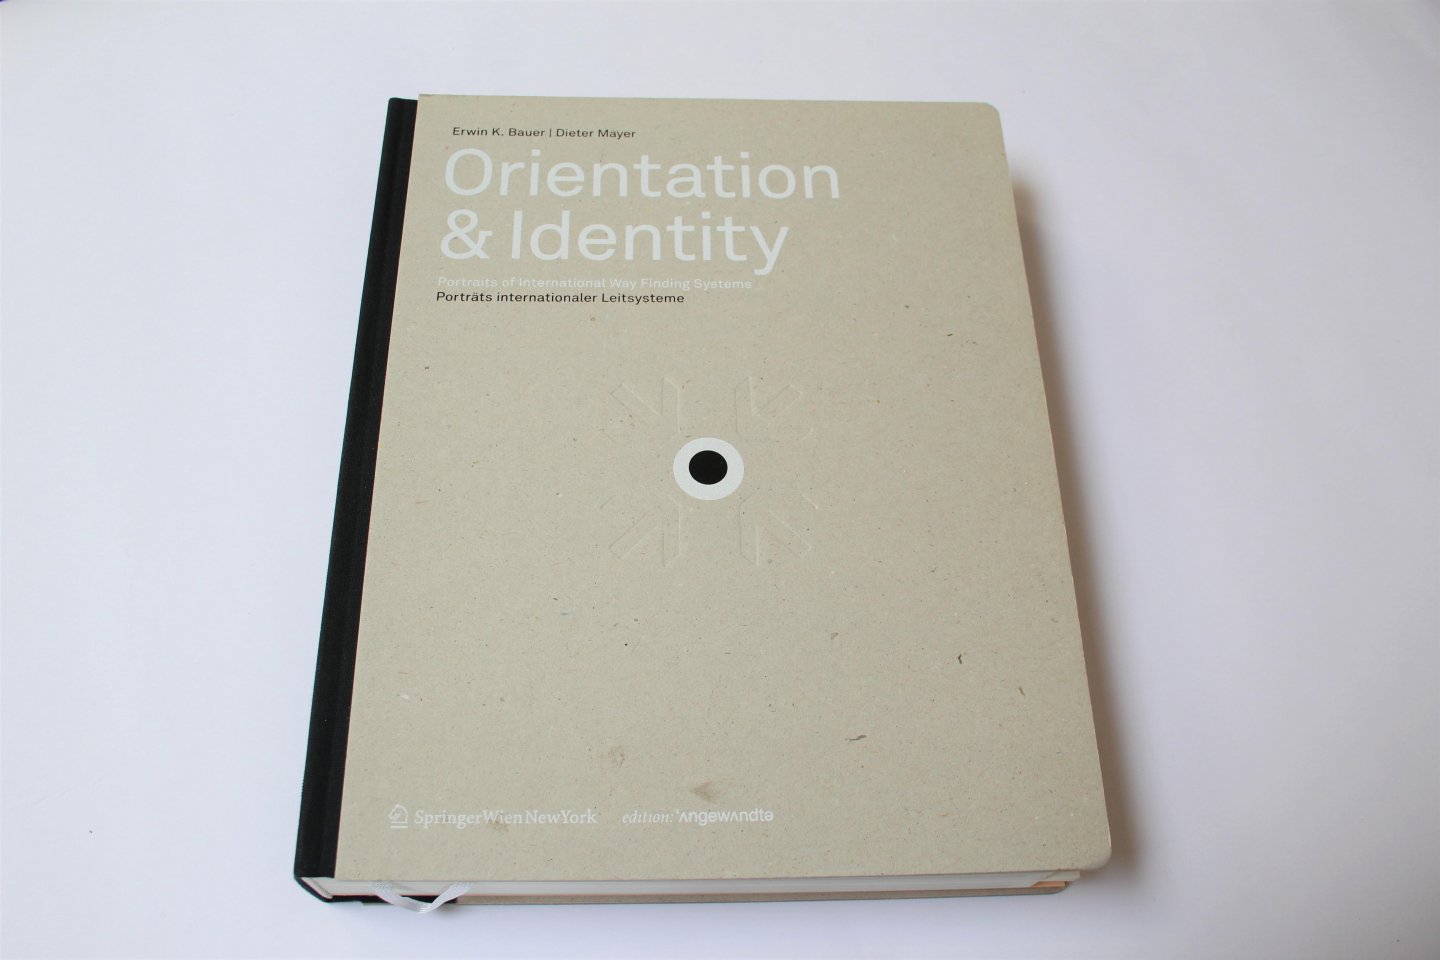 Bauer, Erwin K. - Orientation & Identity: Portraits of Way Finding Systems | Porträts internationaler Leitsysteme